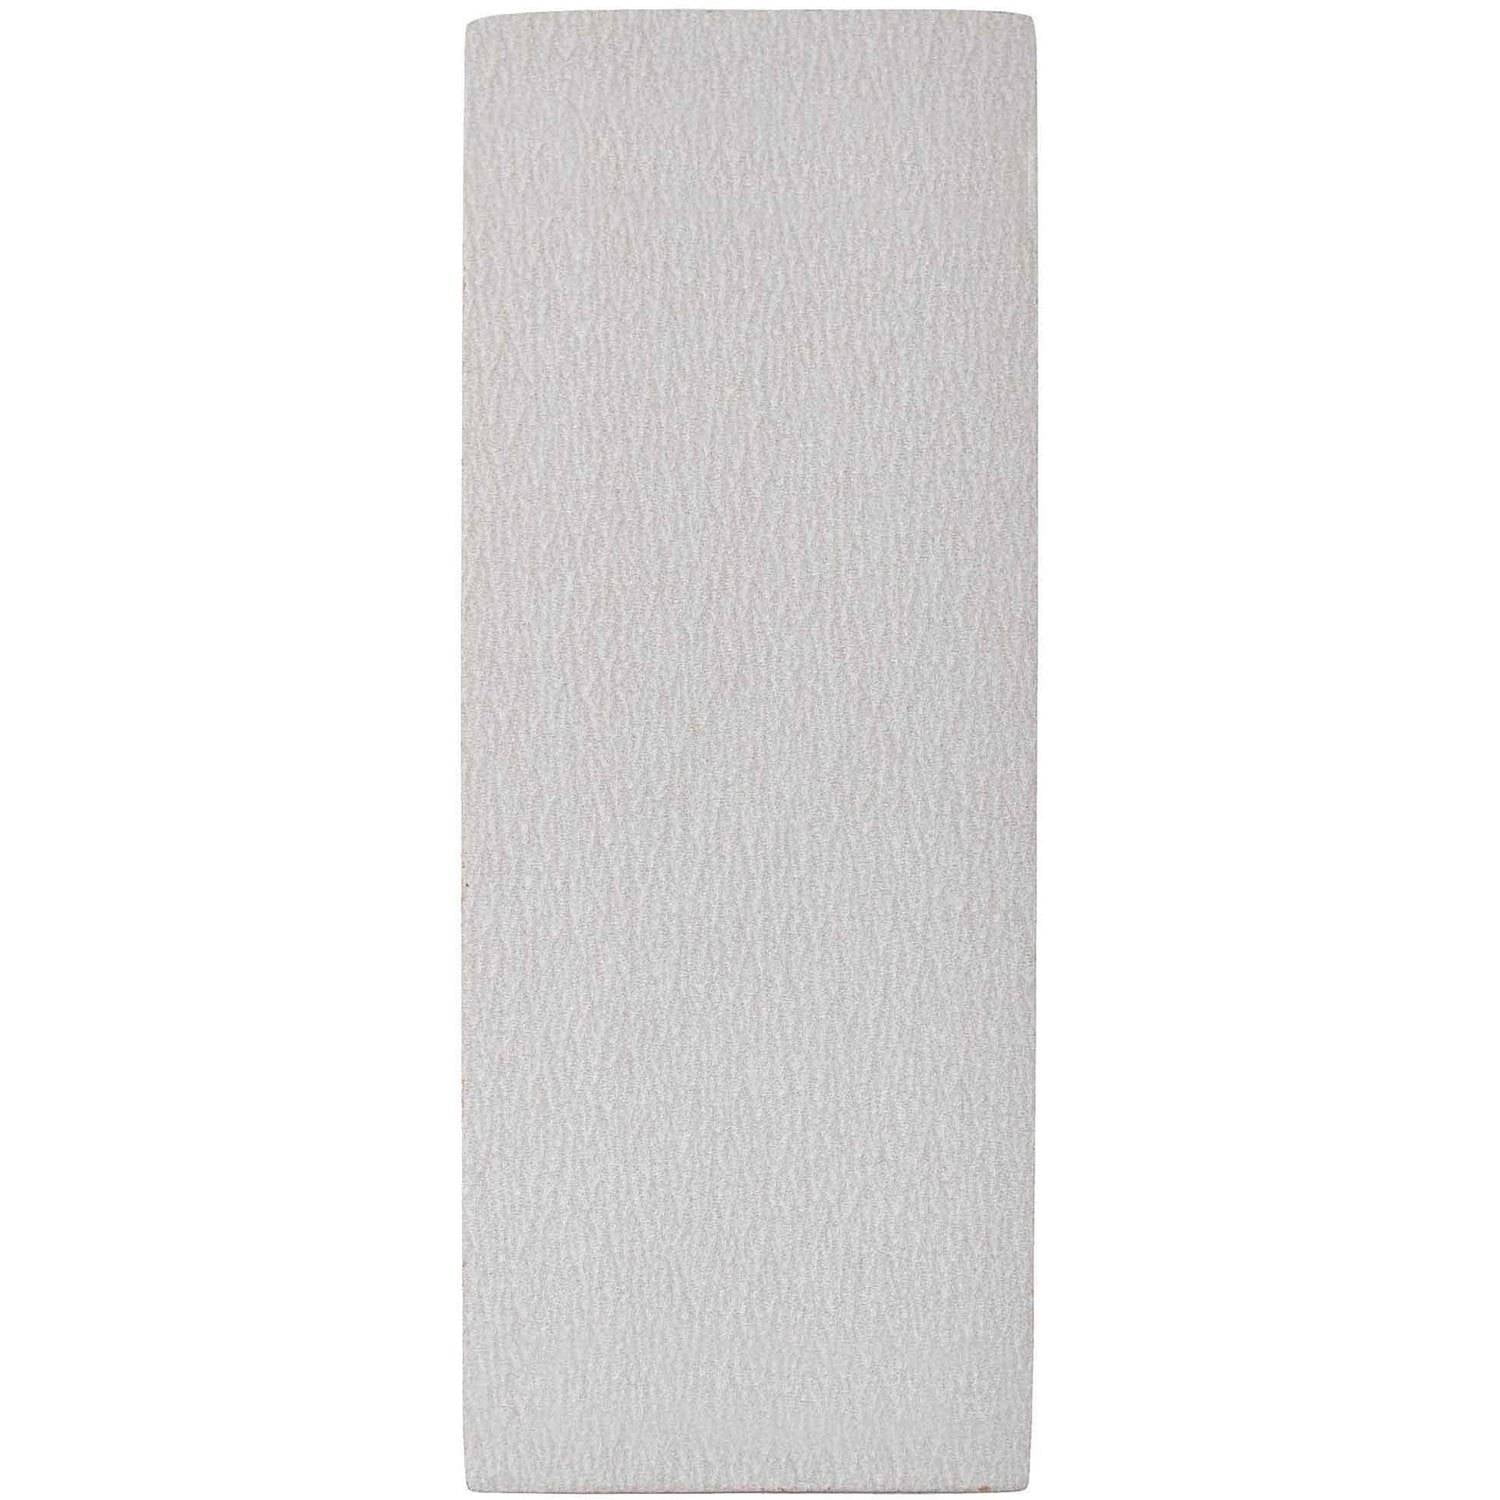 ALEKO 50 Pieces 80 Grit Sandpaper Sheets 4.5 x 5.5 In Grey Color 